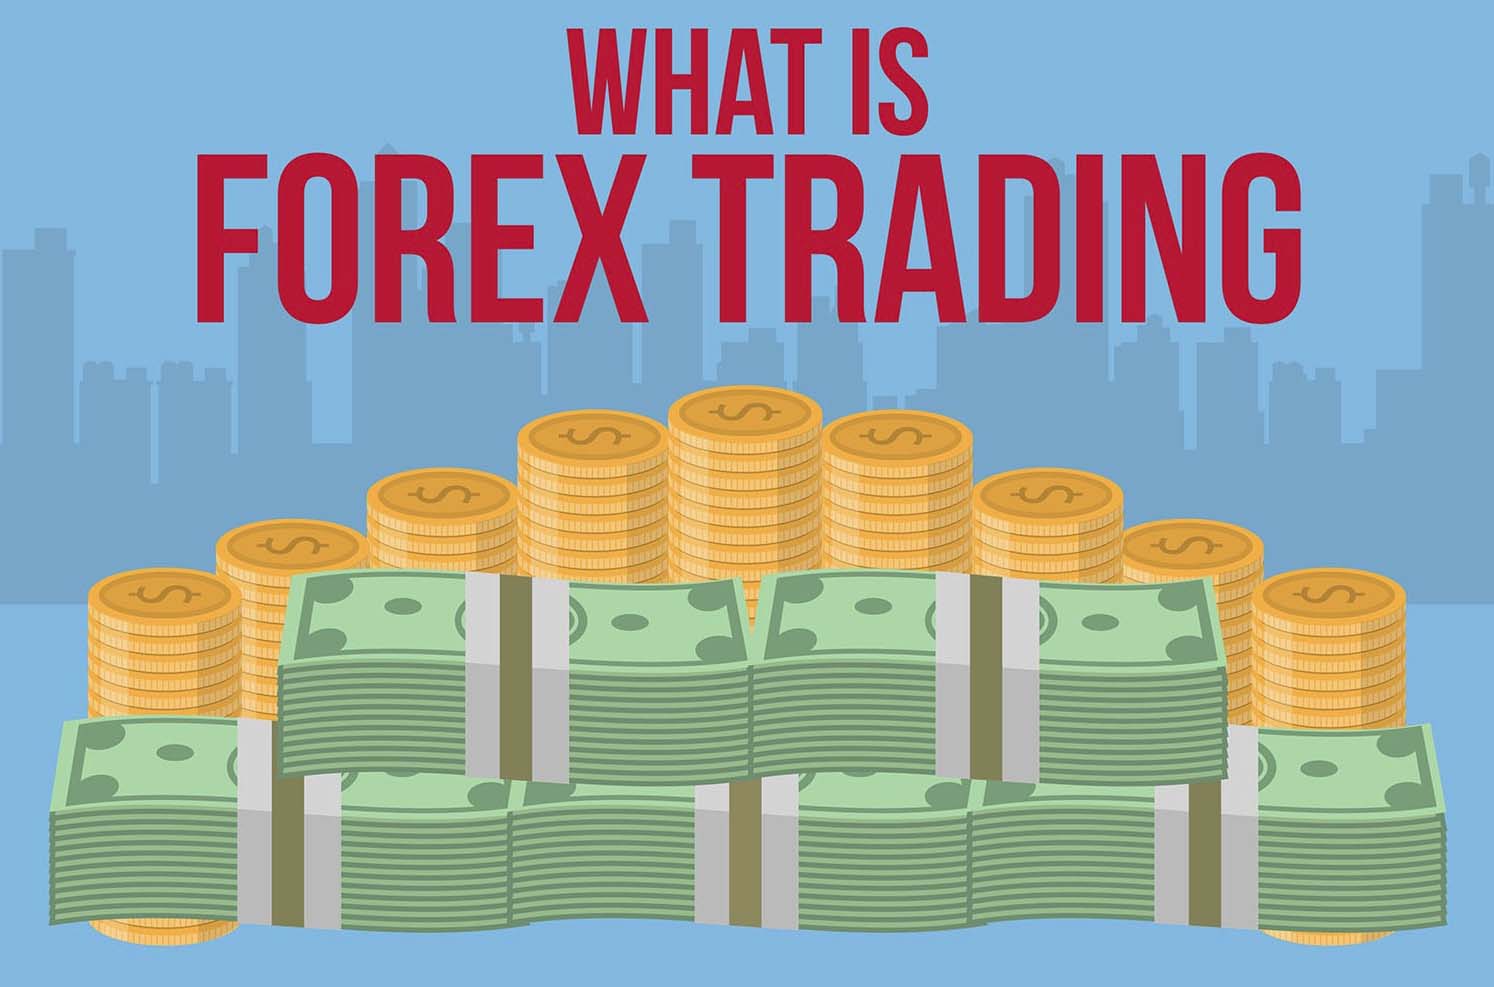 Gforex trading